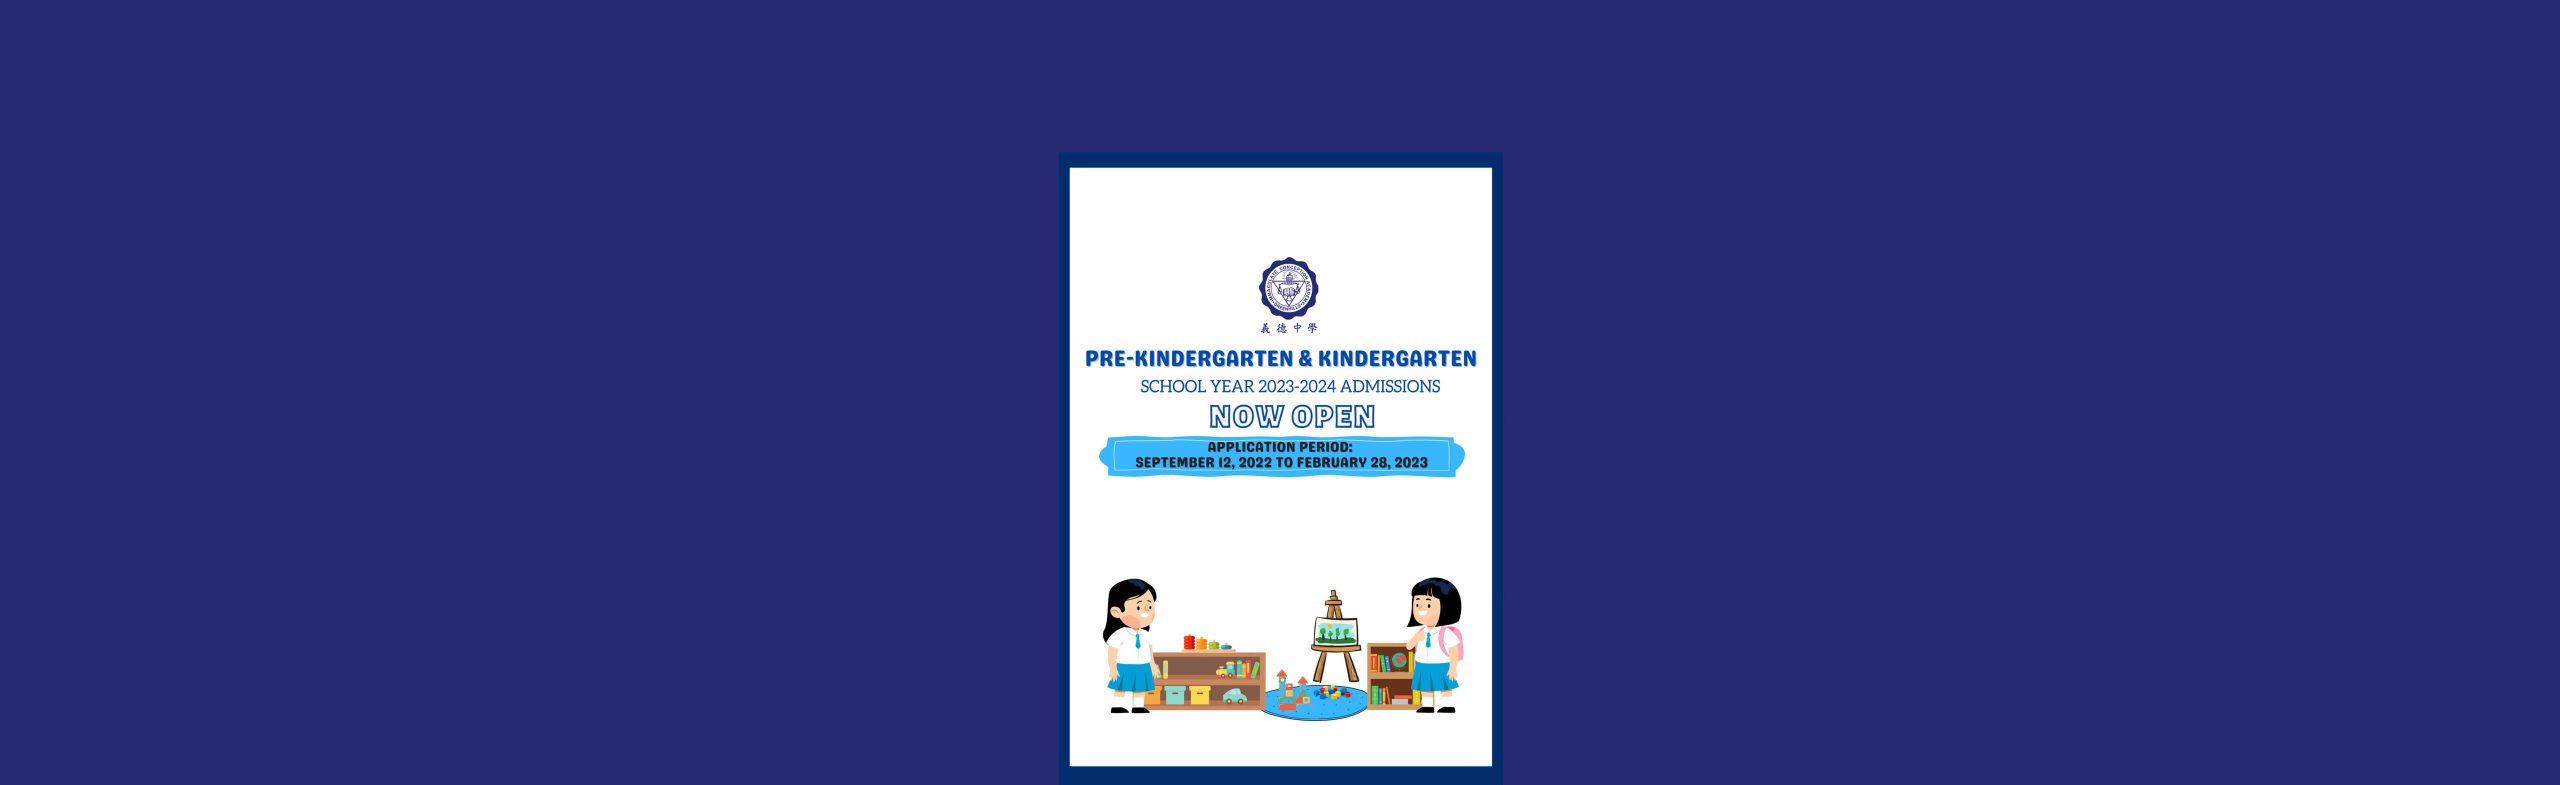 ICAGH Pre-Kindergarten and Kindergarten SY 2023-2024 Admissions